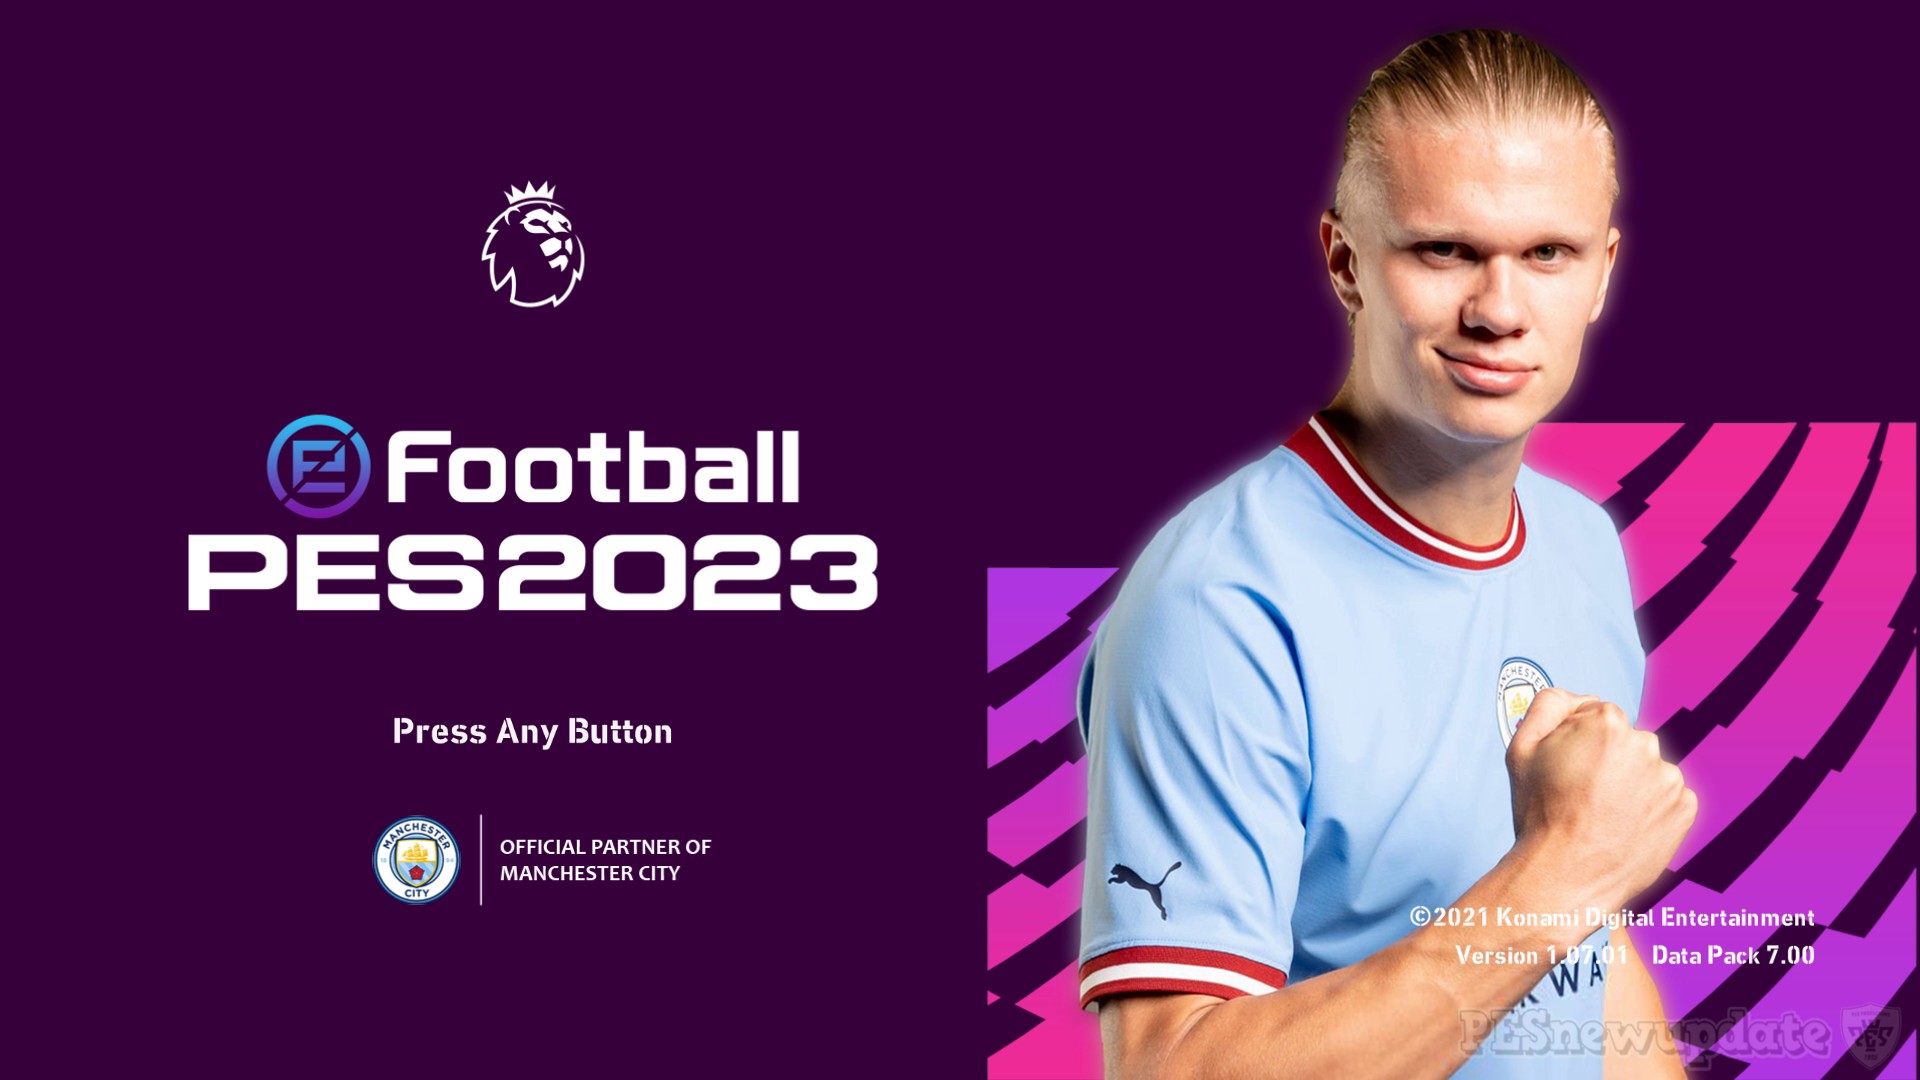 PES 2021 Menu Premier League 2022 2023 V2 By PESNewupdate PESNewupdate.com. Free Download Latest Pro Evolution Soccer Patch & Updates